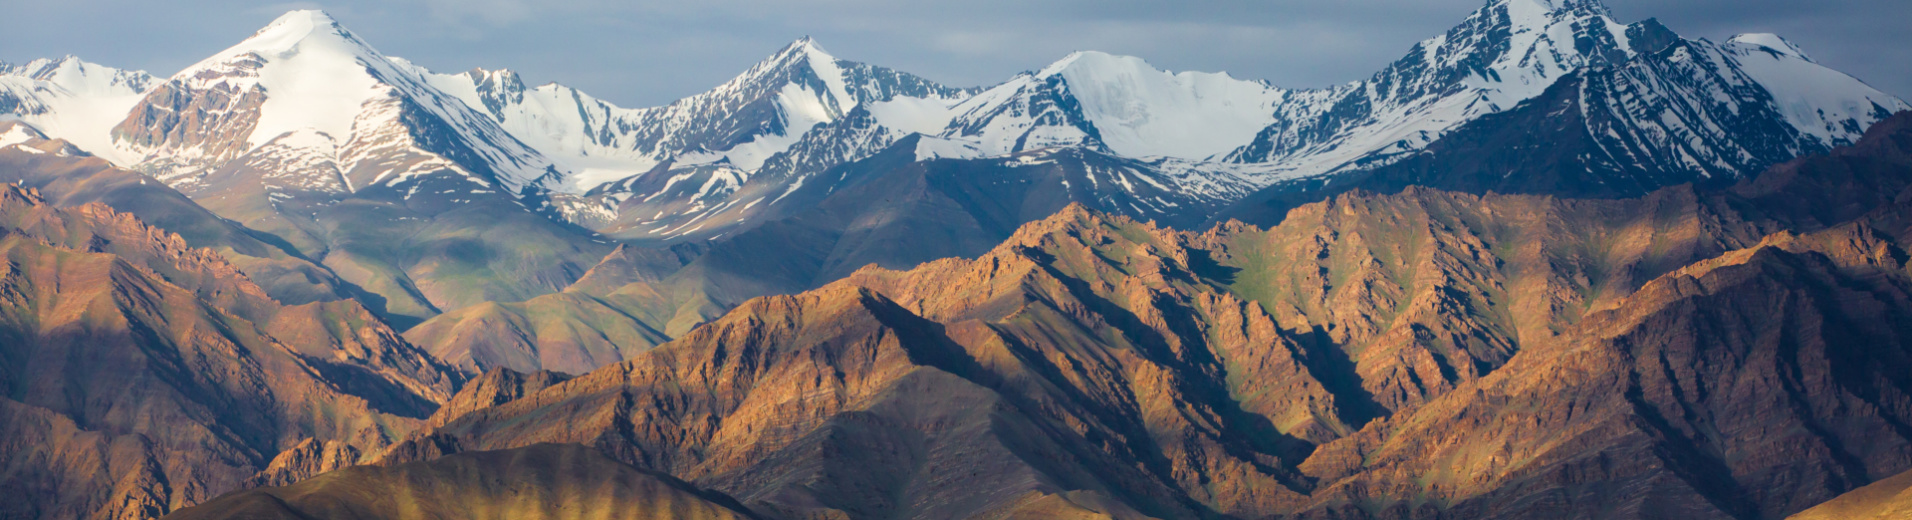 montagnes-himalaya-ladakh